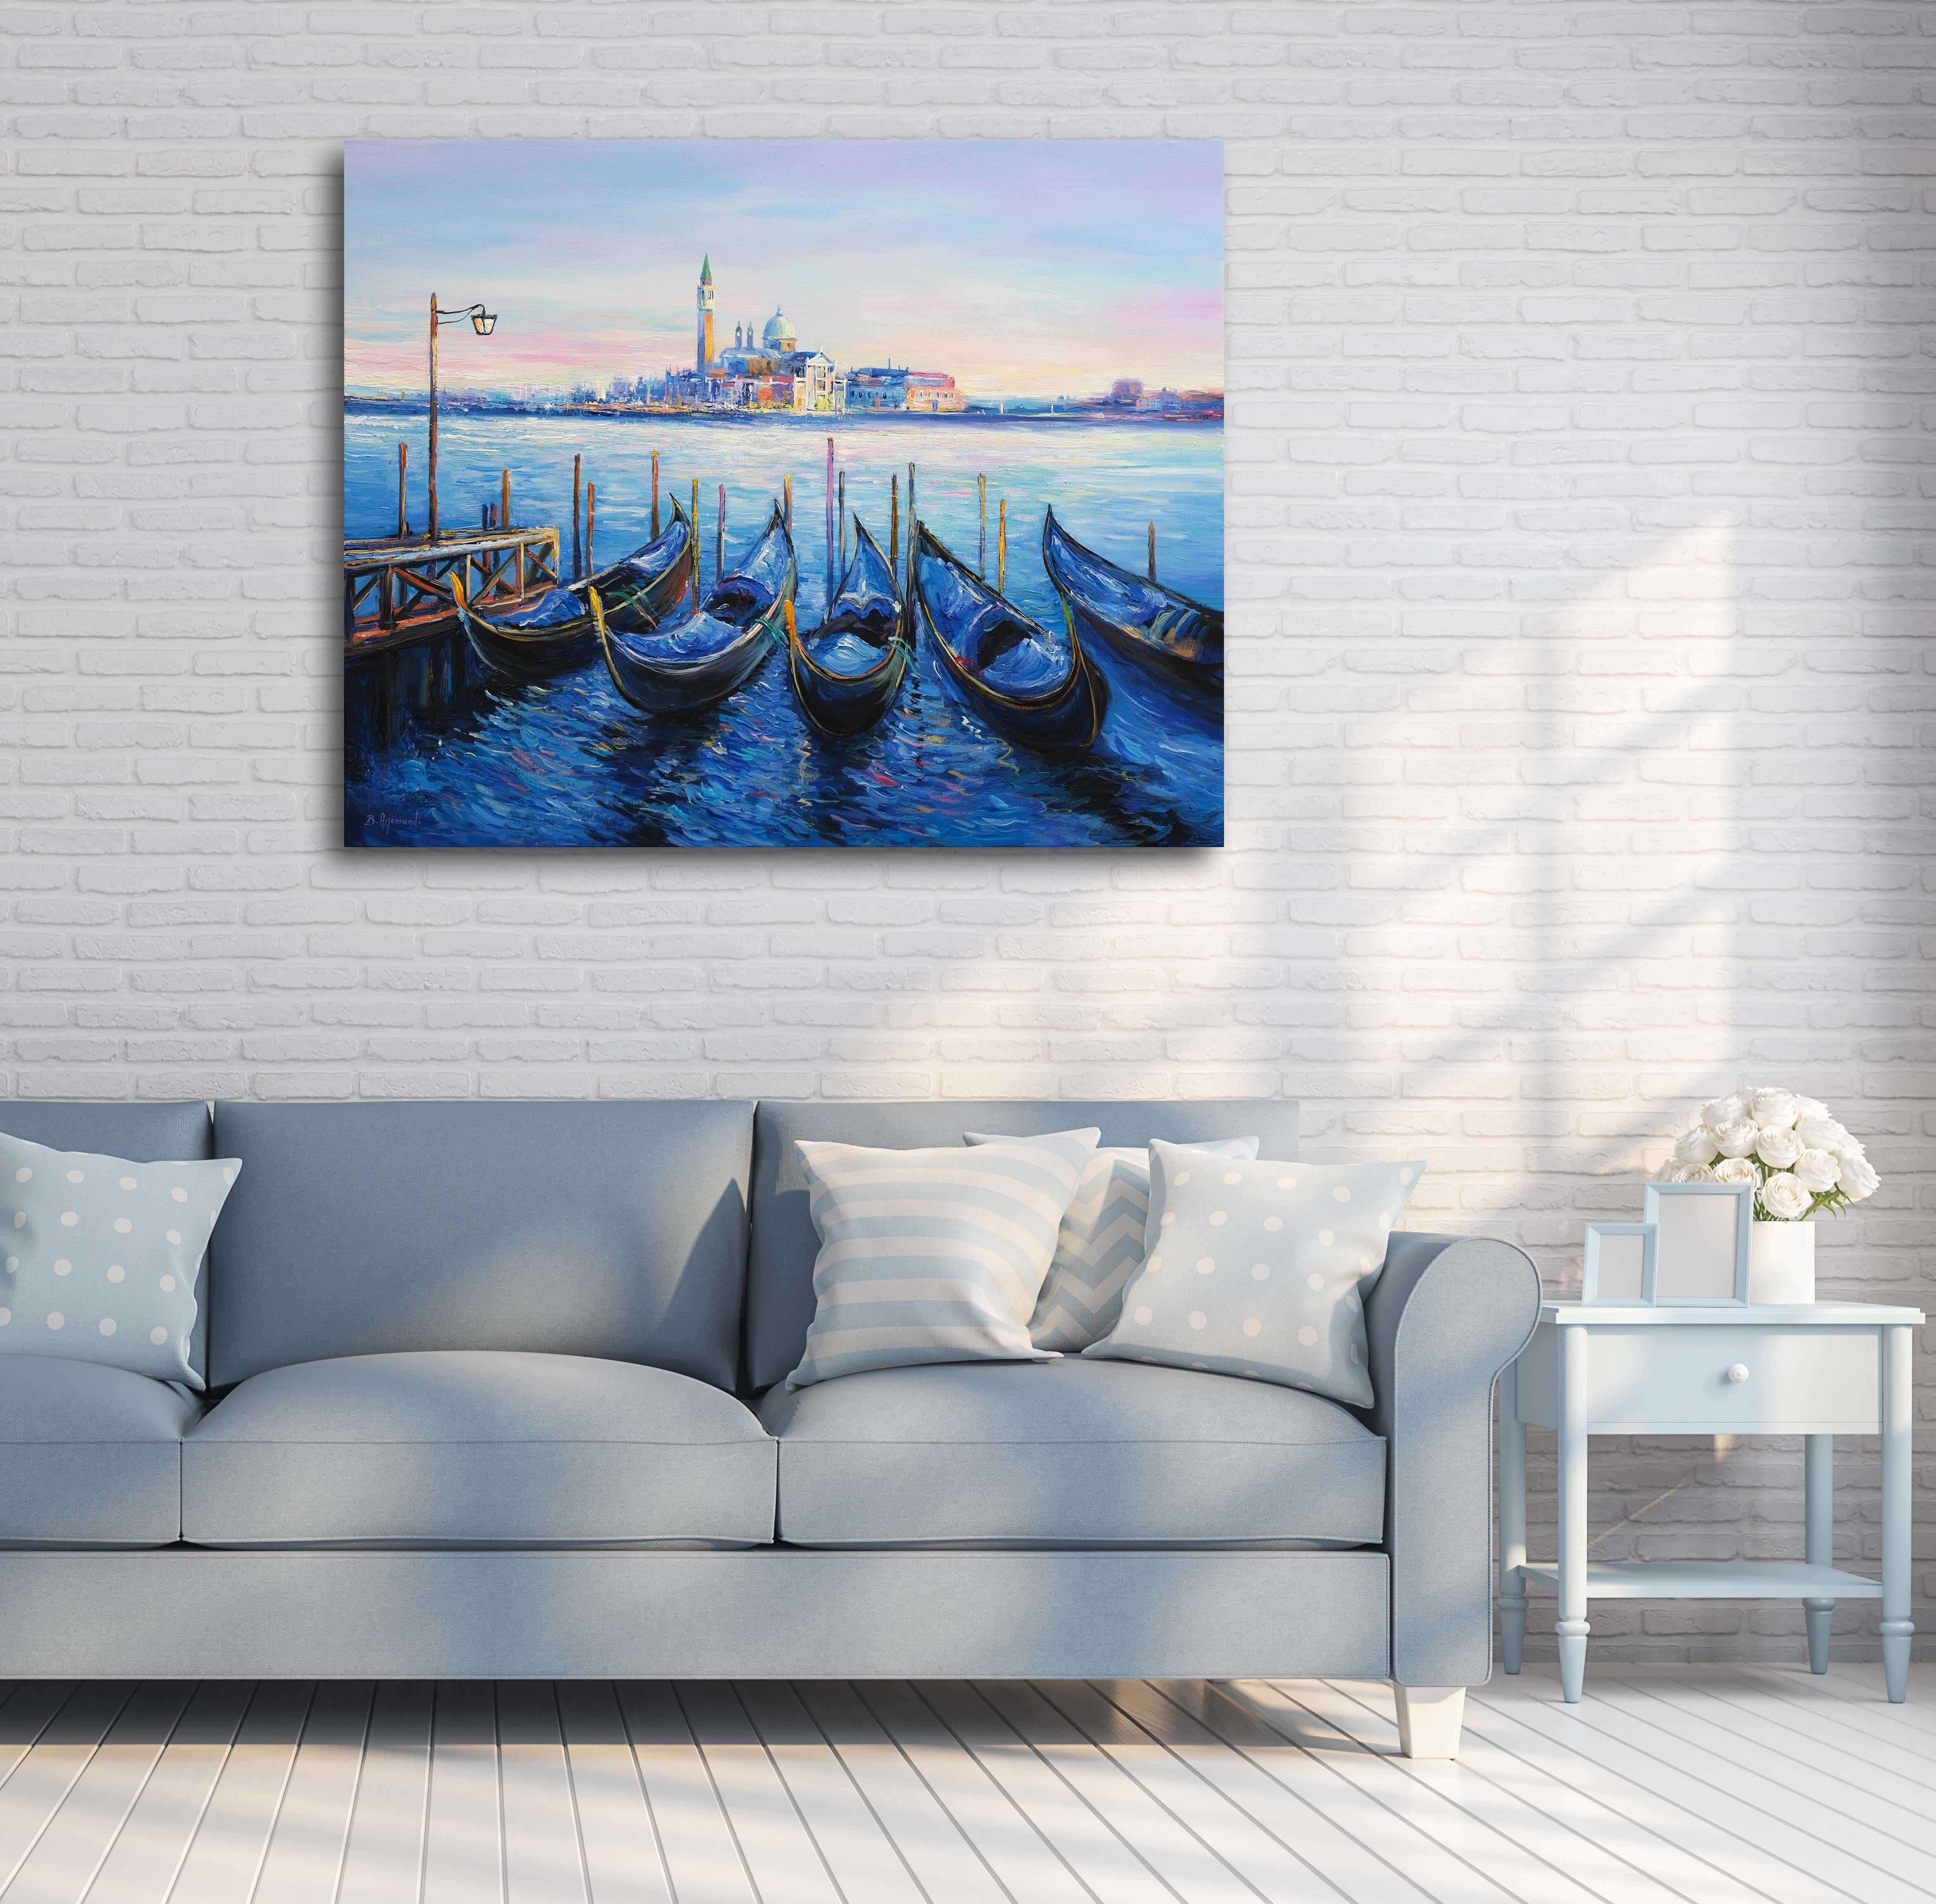 Venice Gondolas, Painting, Acrylic on Canvas 1